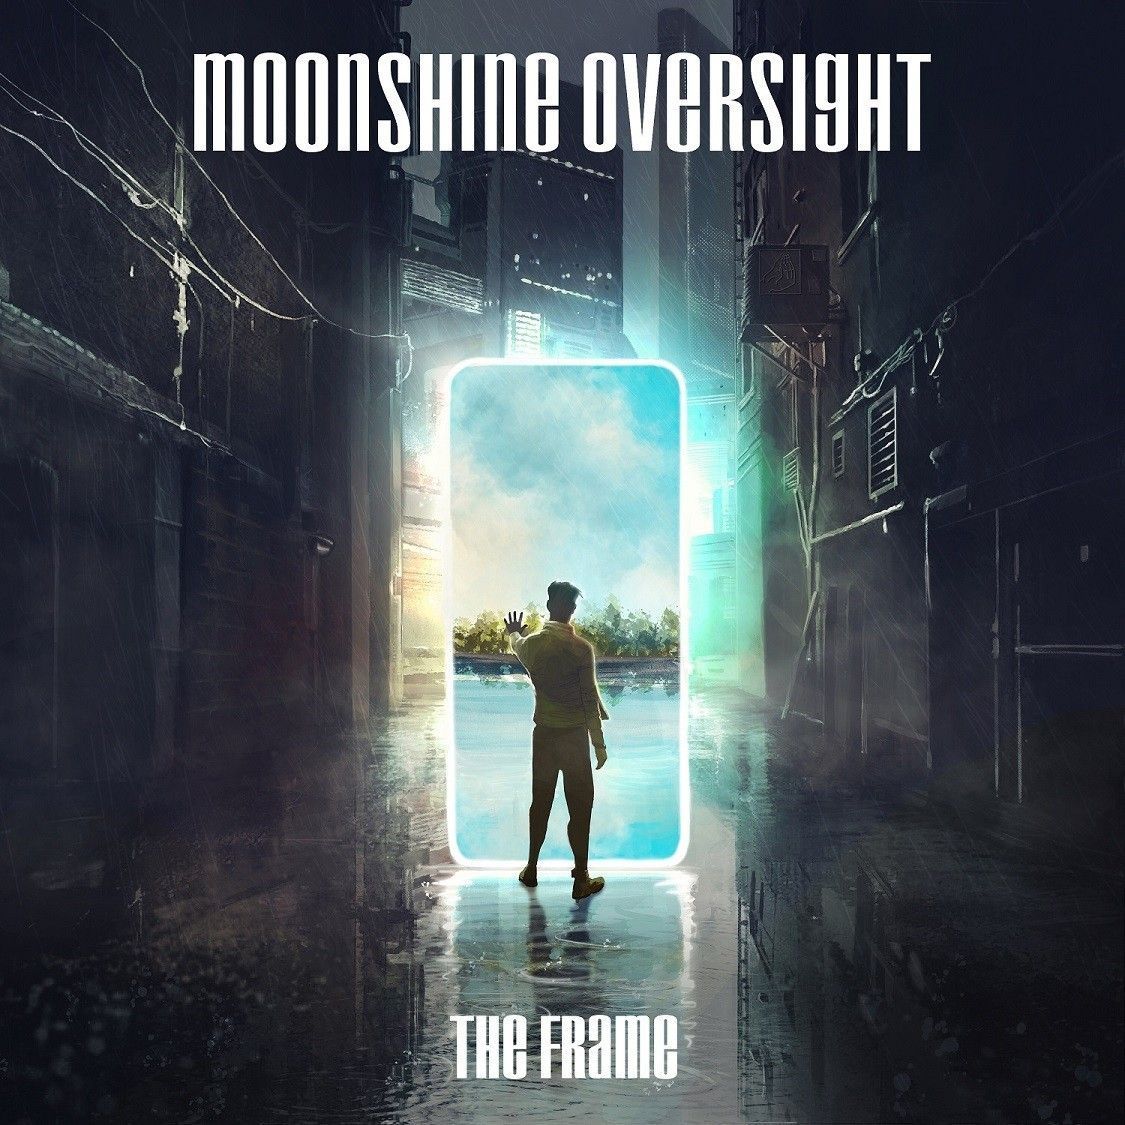 Moonshine Oversight - Tear Factory (clip)